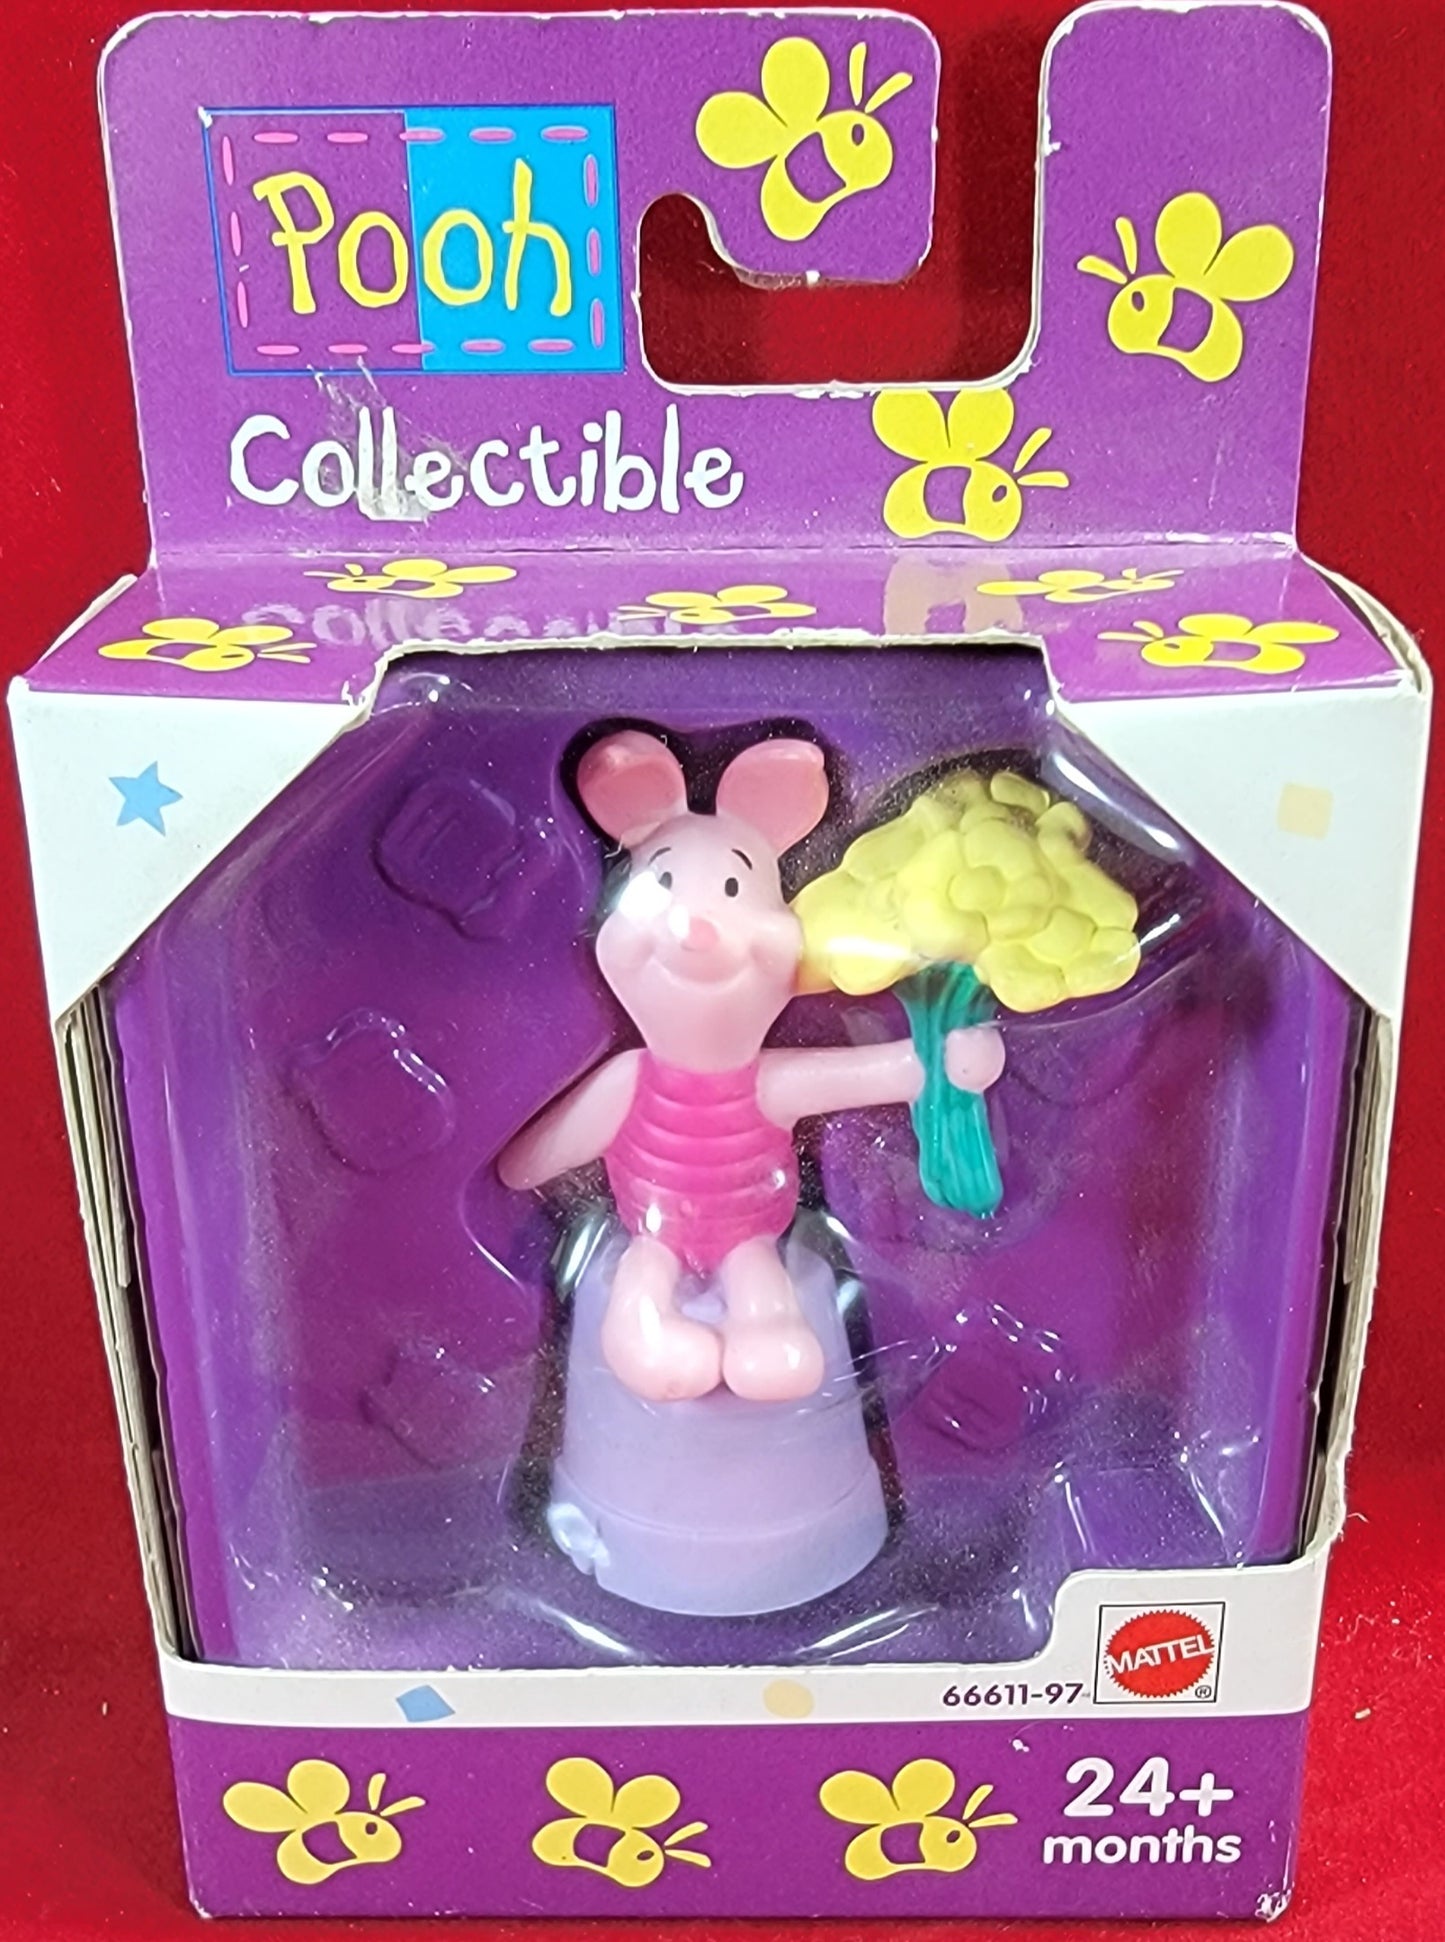 Pooh collectible piget figure (nib)